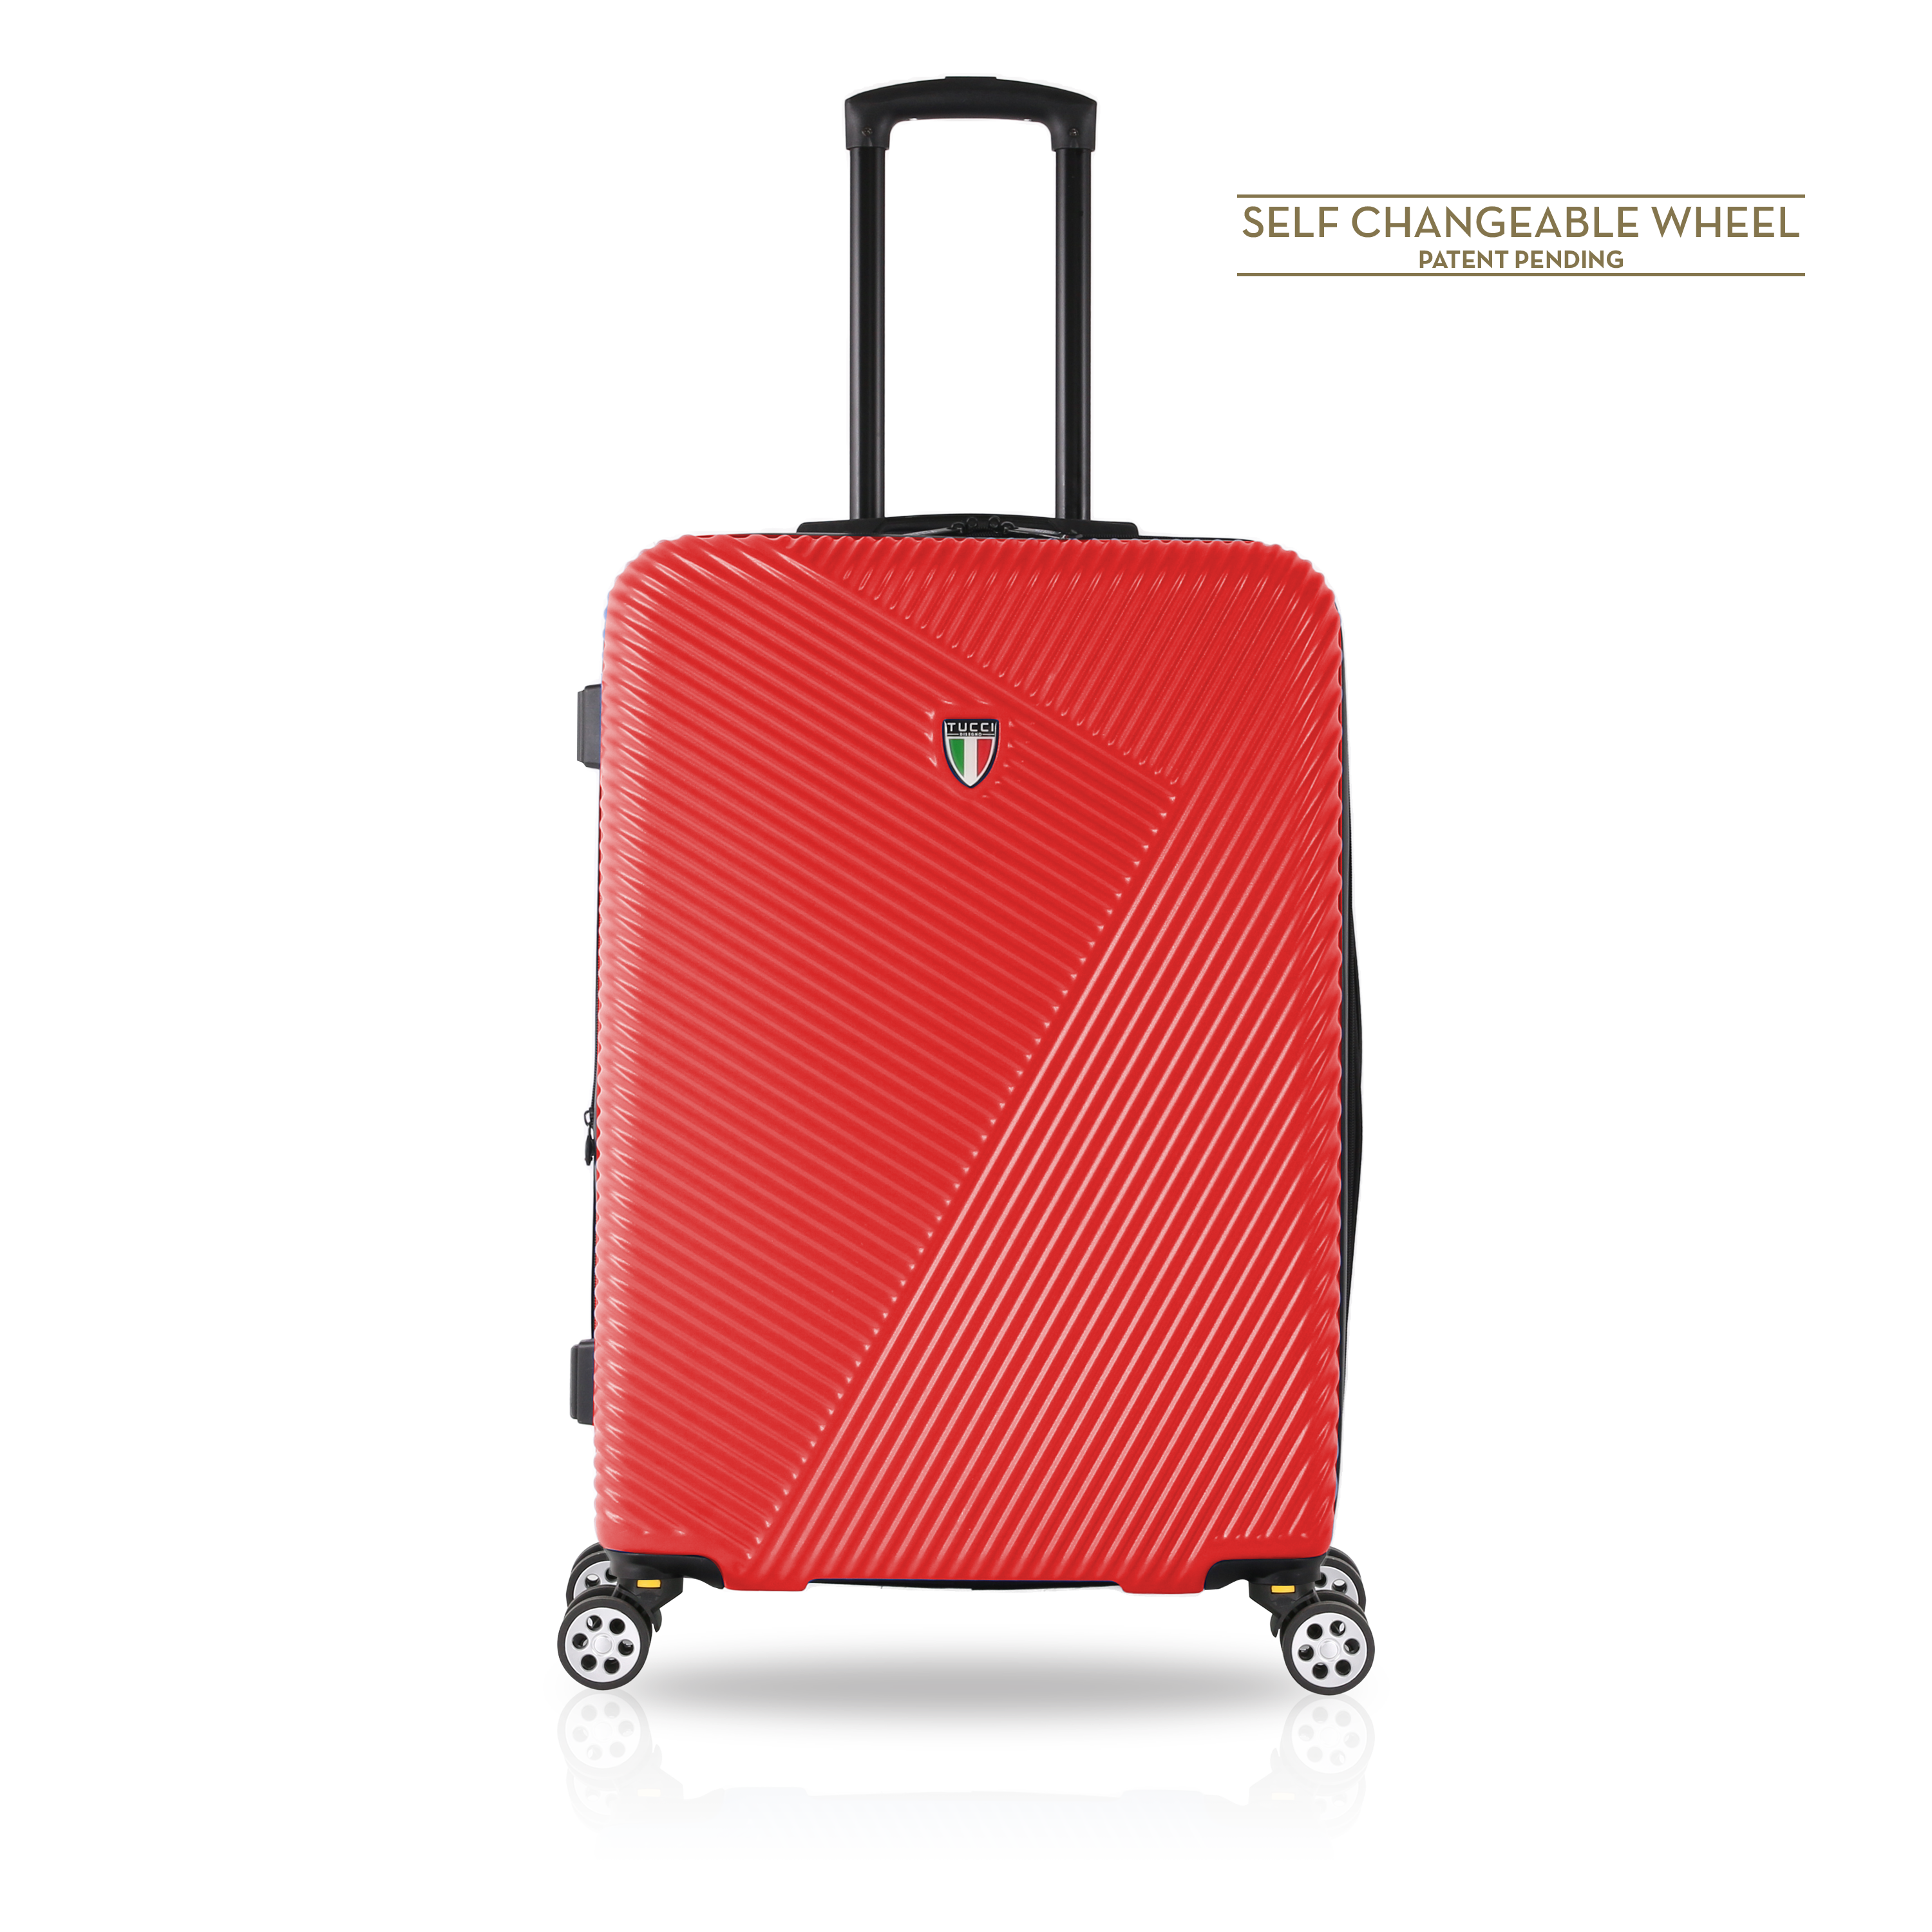 TUCCI Italy TESORO 26" Spinner Wheel Medium Luggage Suitcase